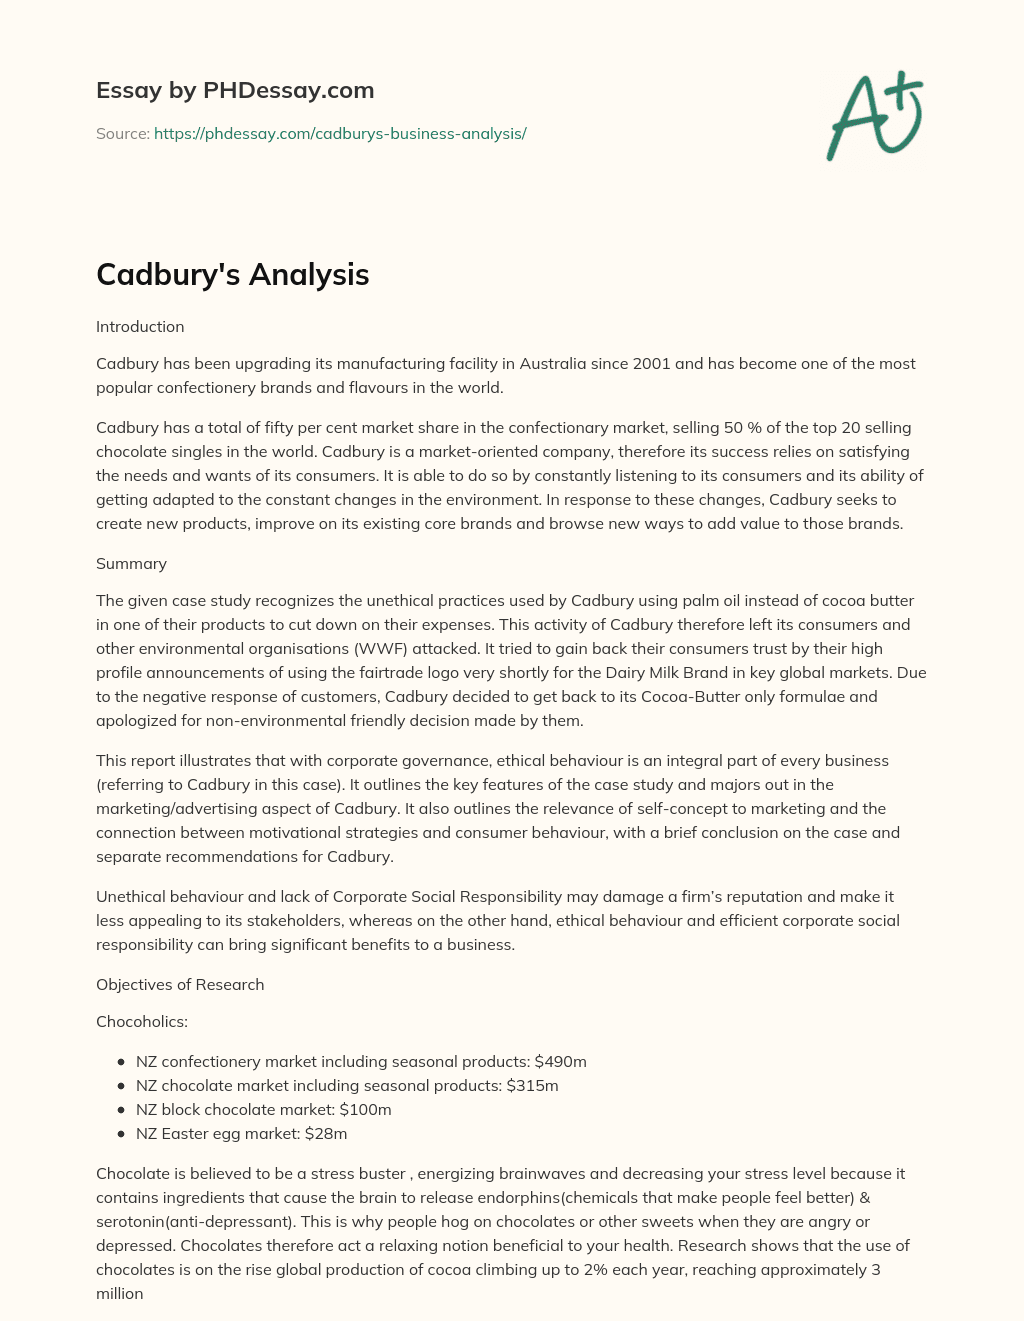 Cadbury’s Analysis essay